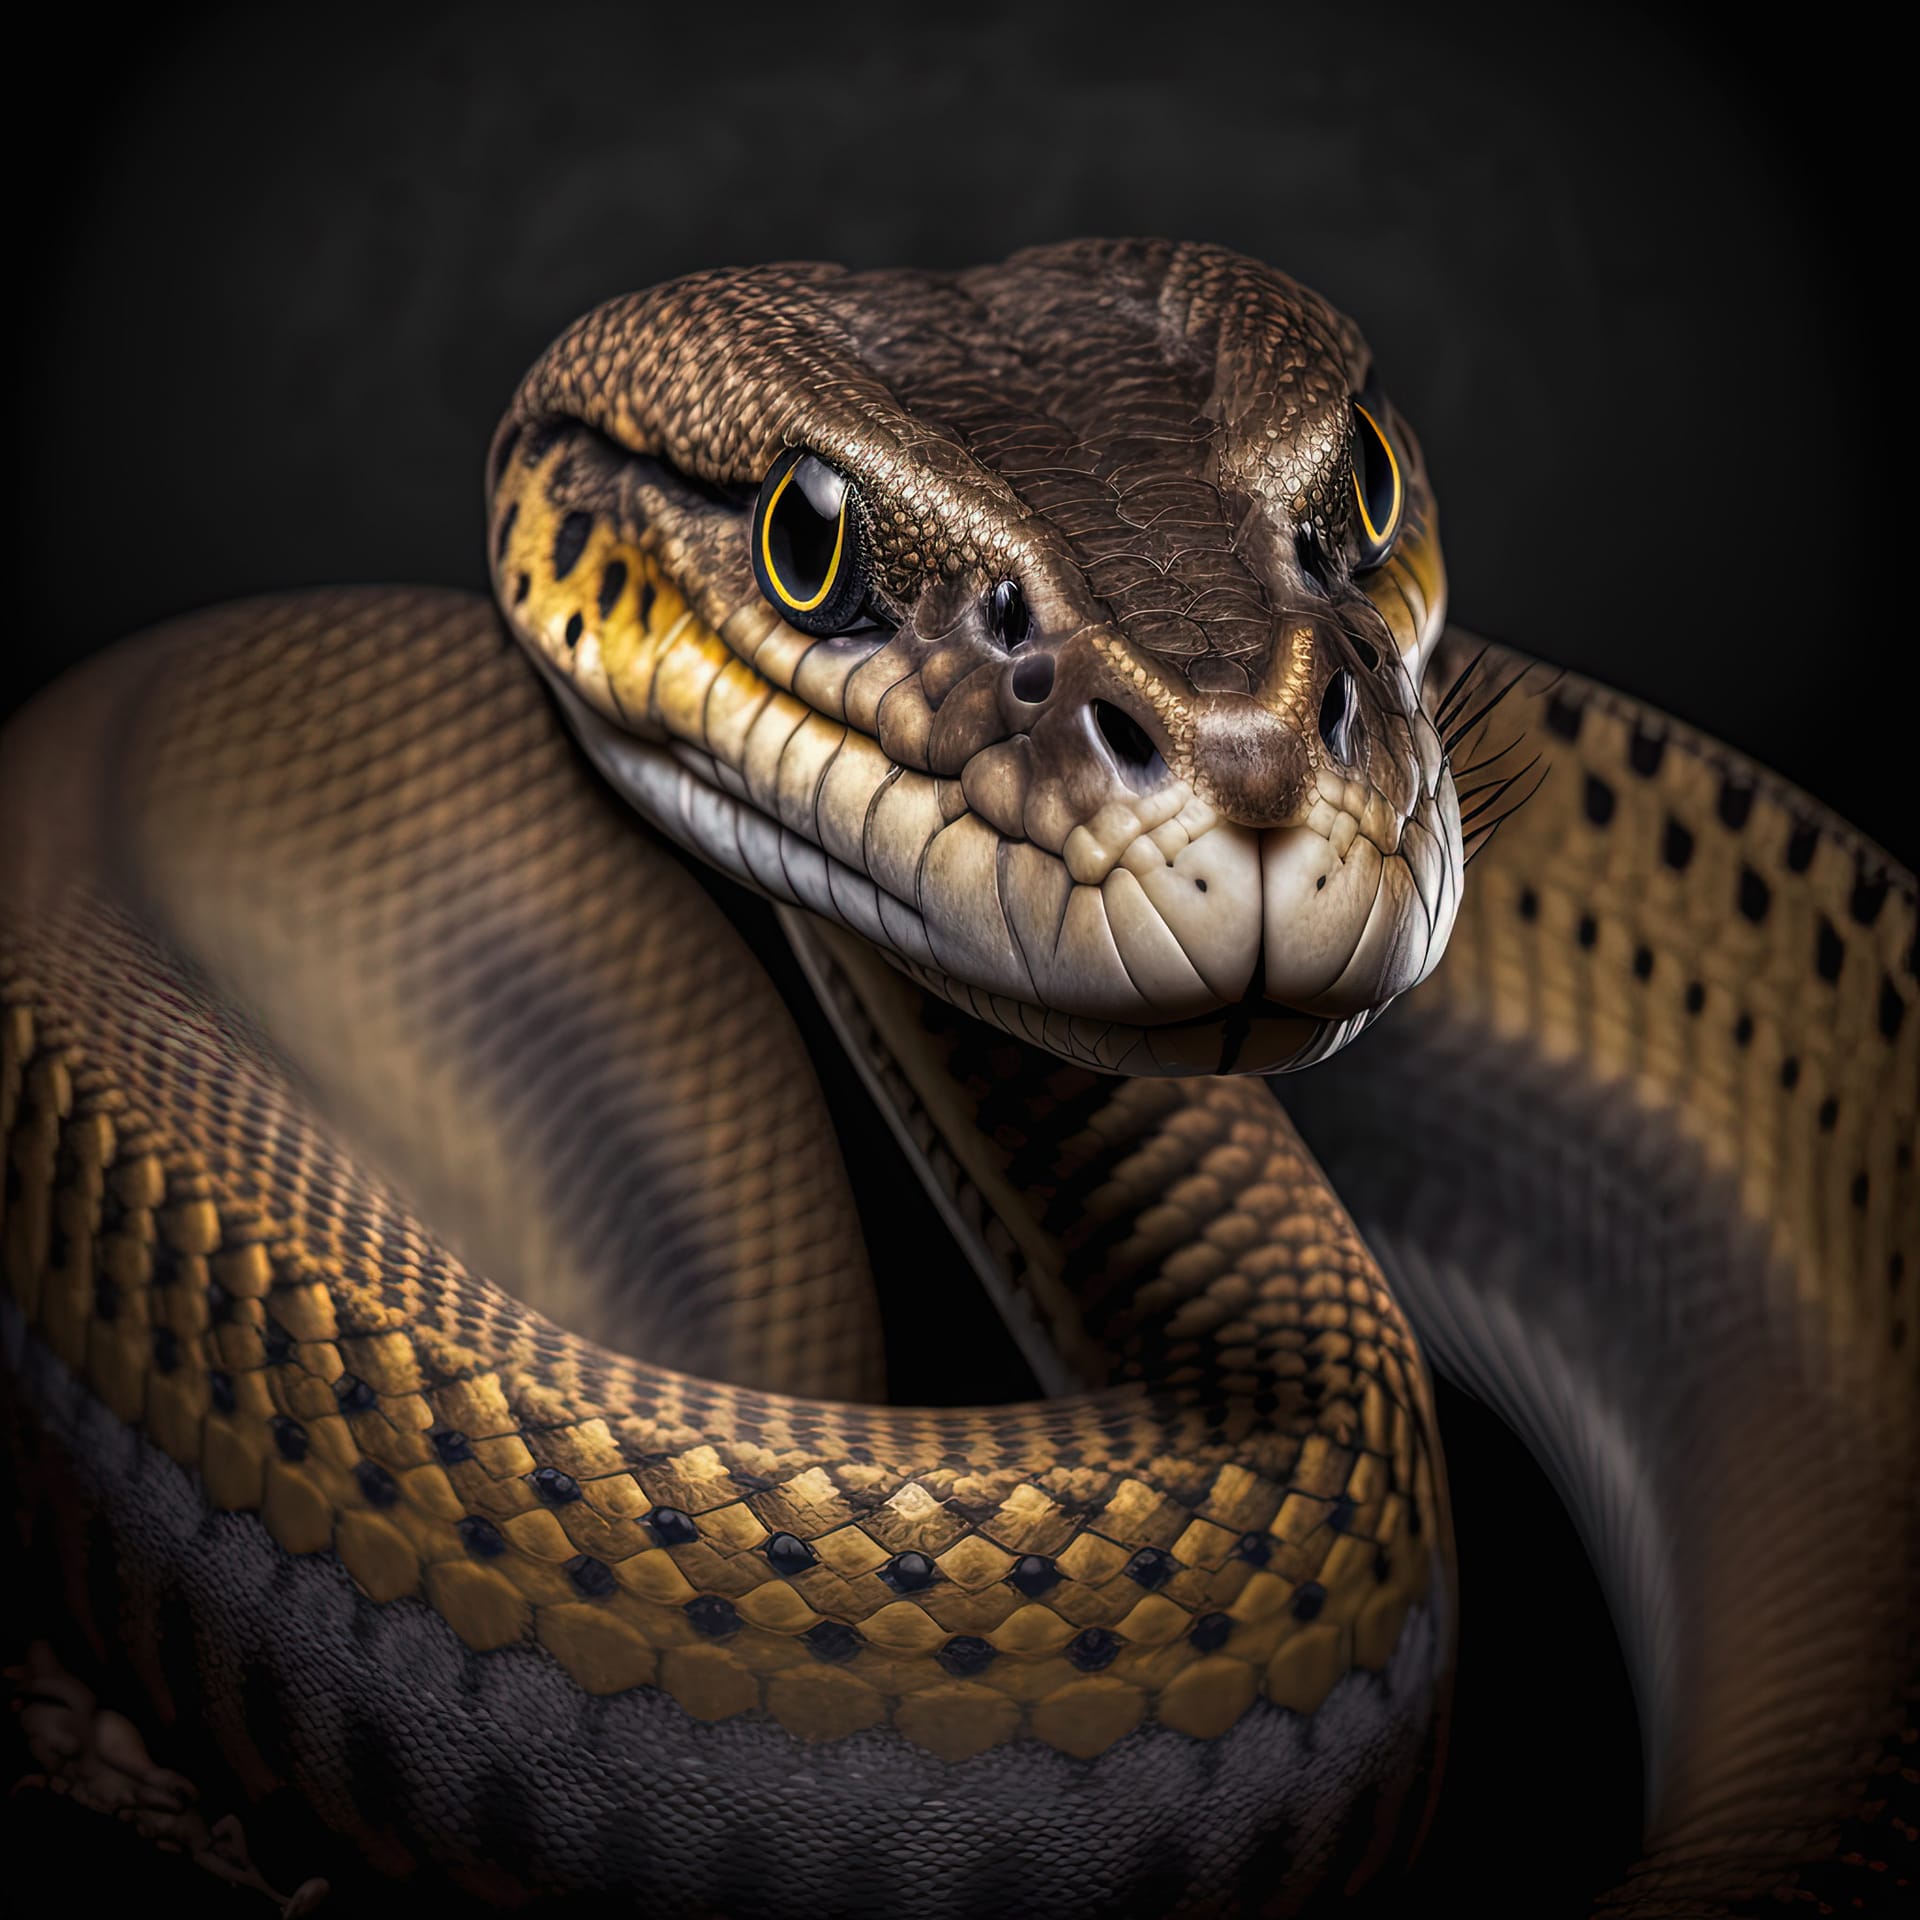 Snake portrait studio ultra realistic image